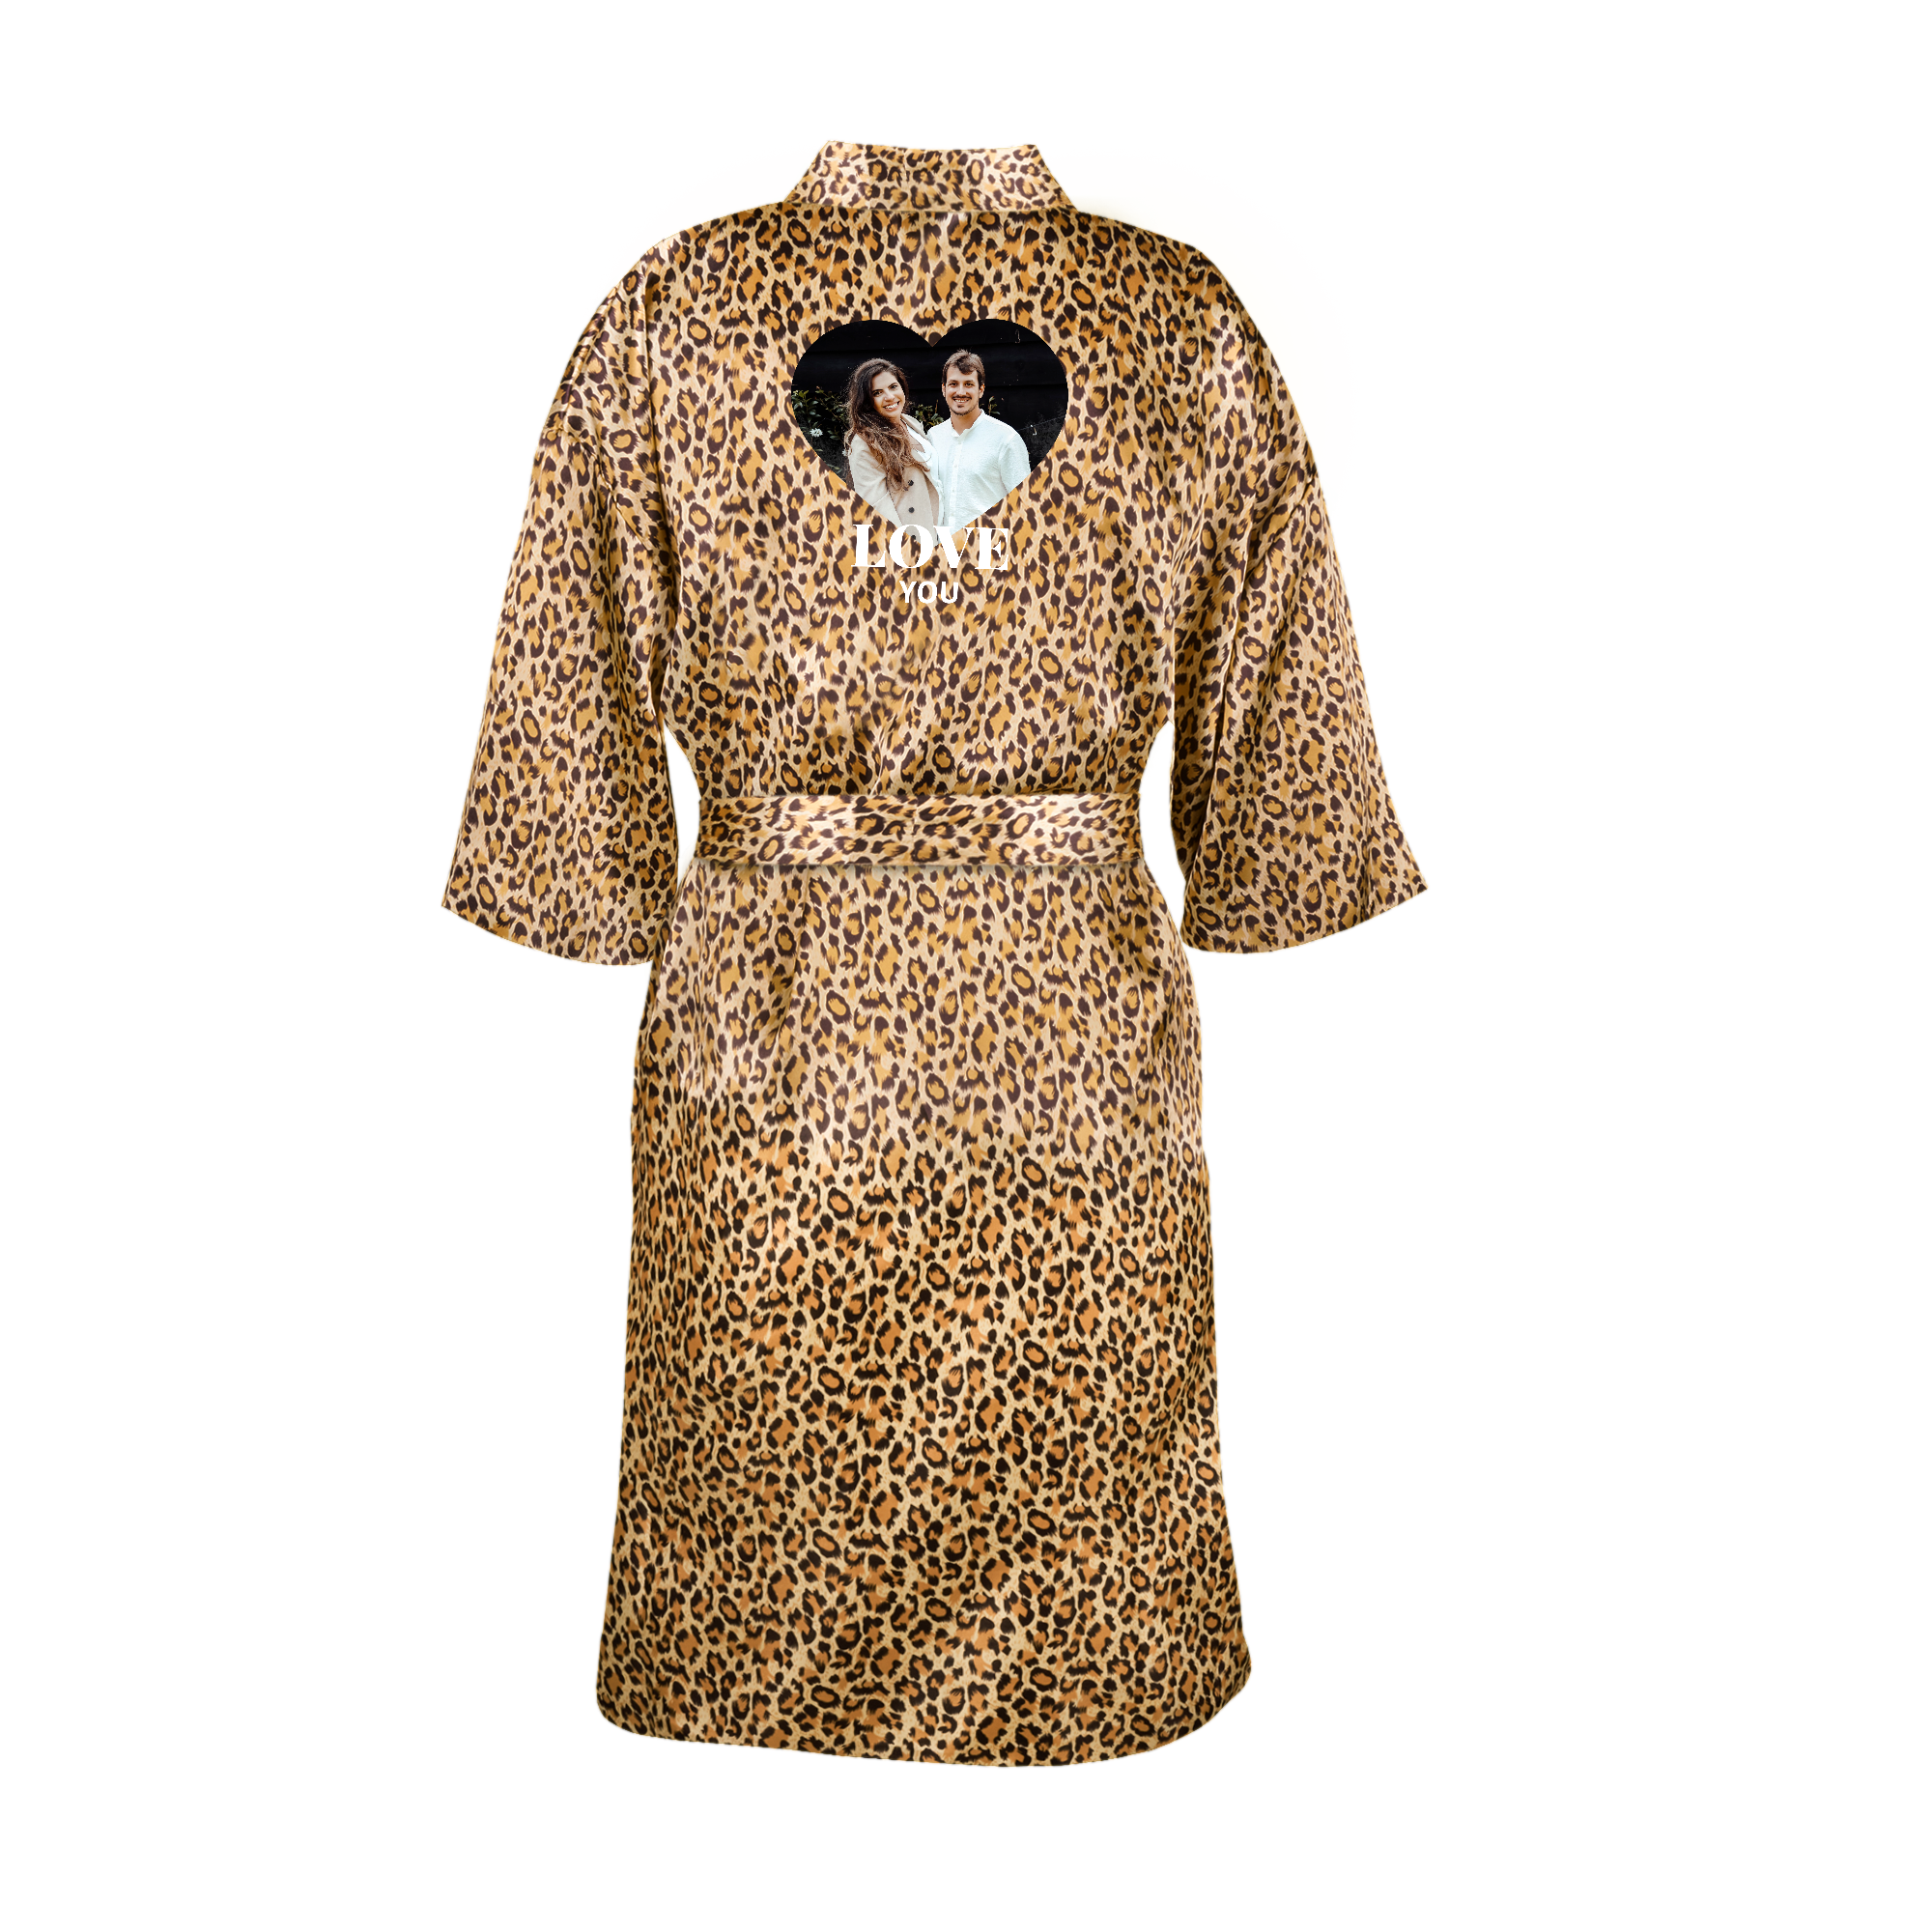 Personalised kimono - Leopard